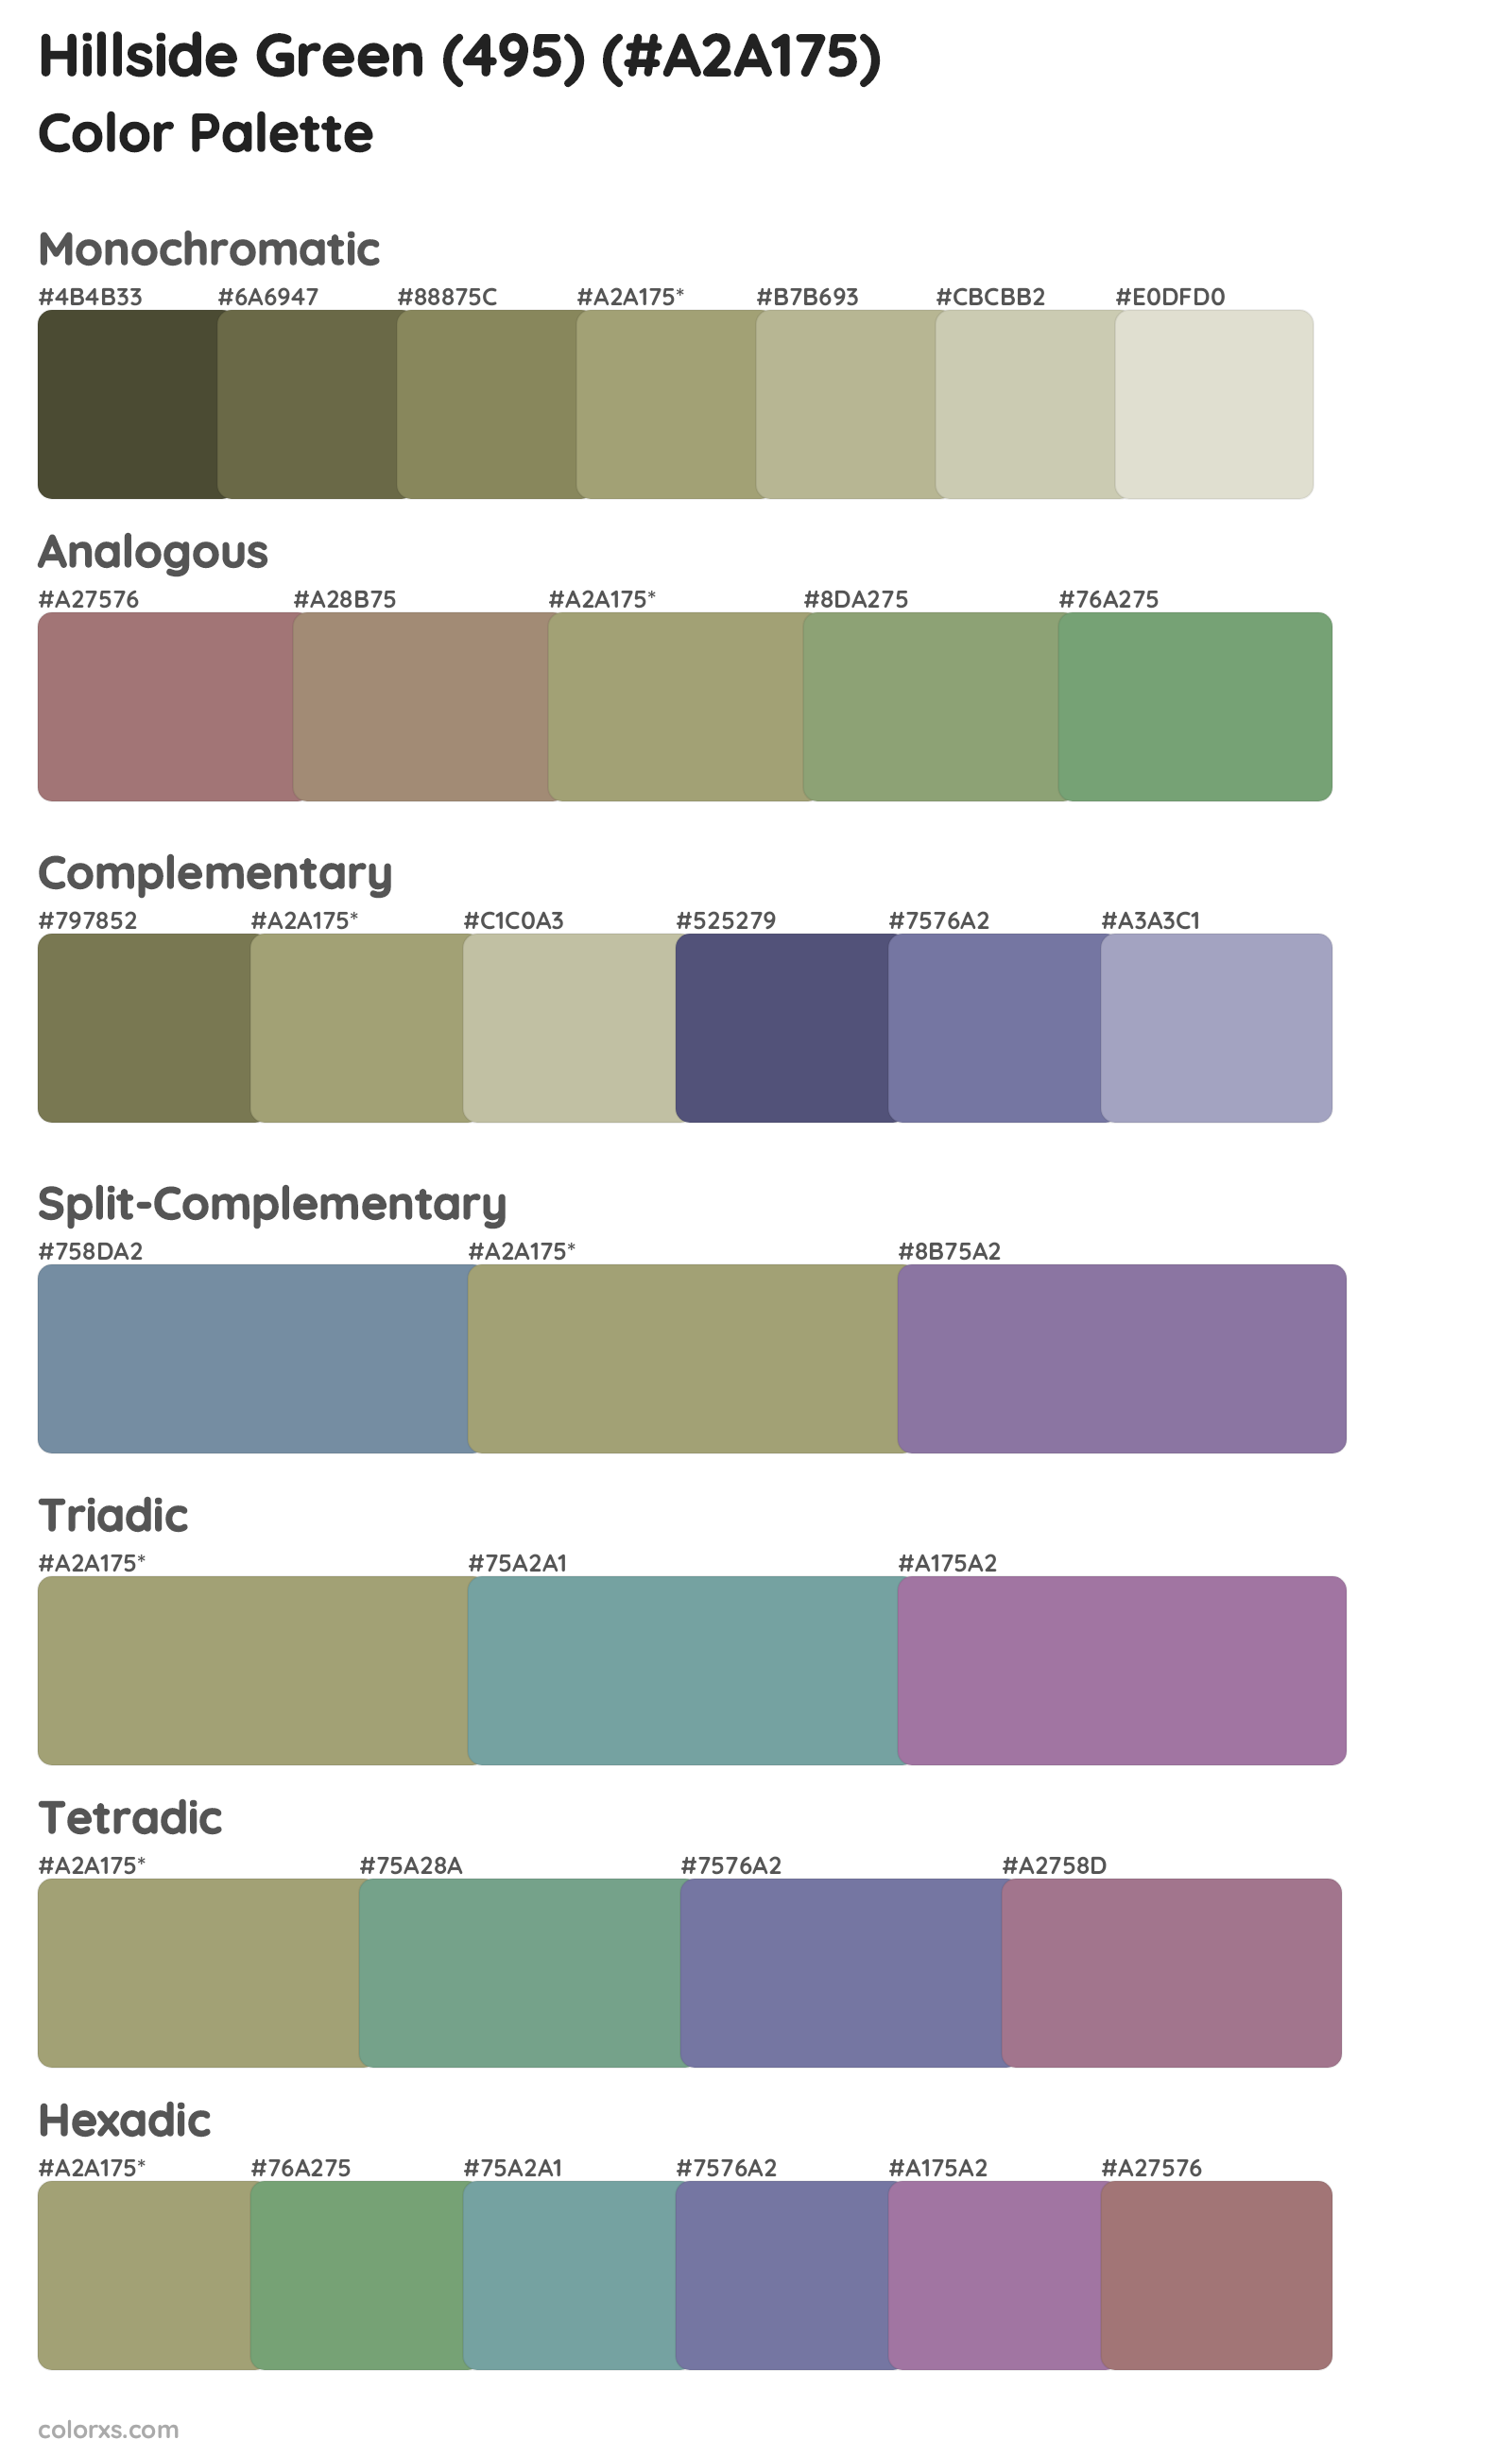 Hillside Green (495) Color Scheme Palettes